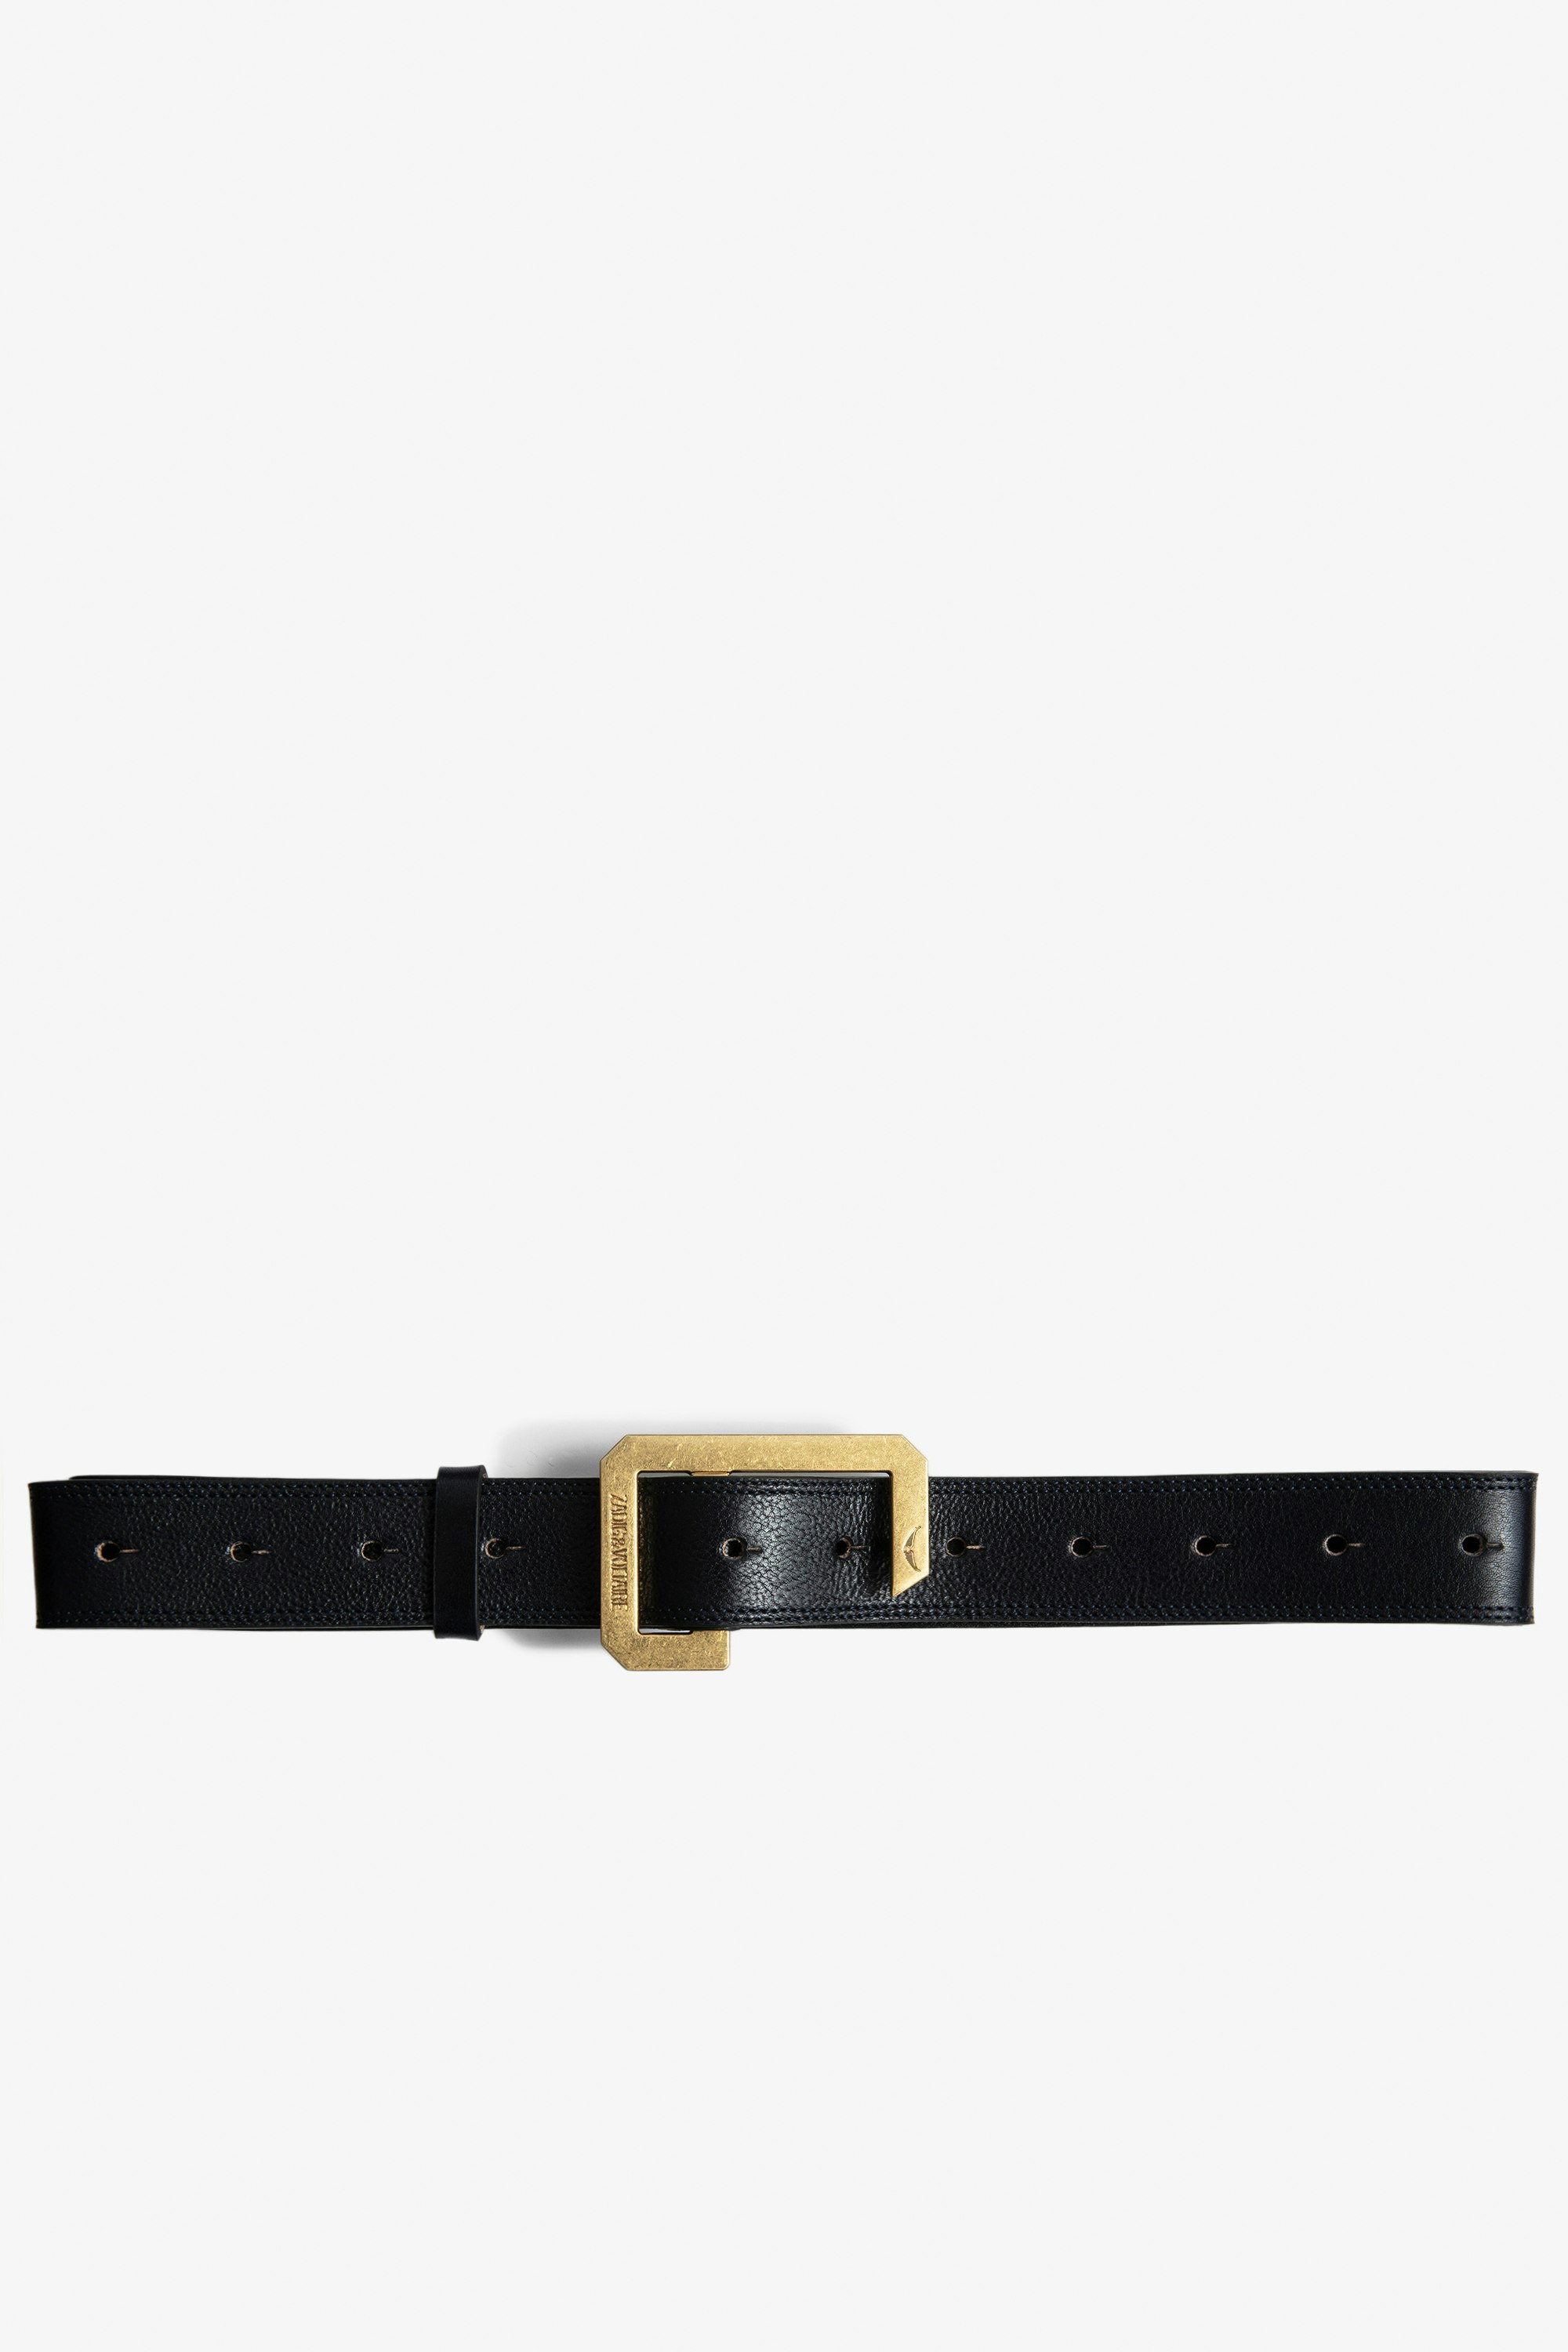 La Cecilia 35 mm Belt Women's adjustable leather belt with C-shaped buckle